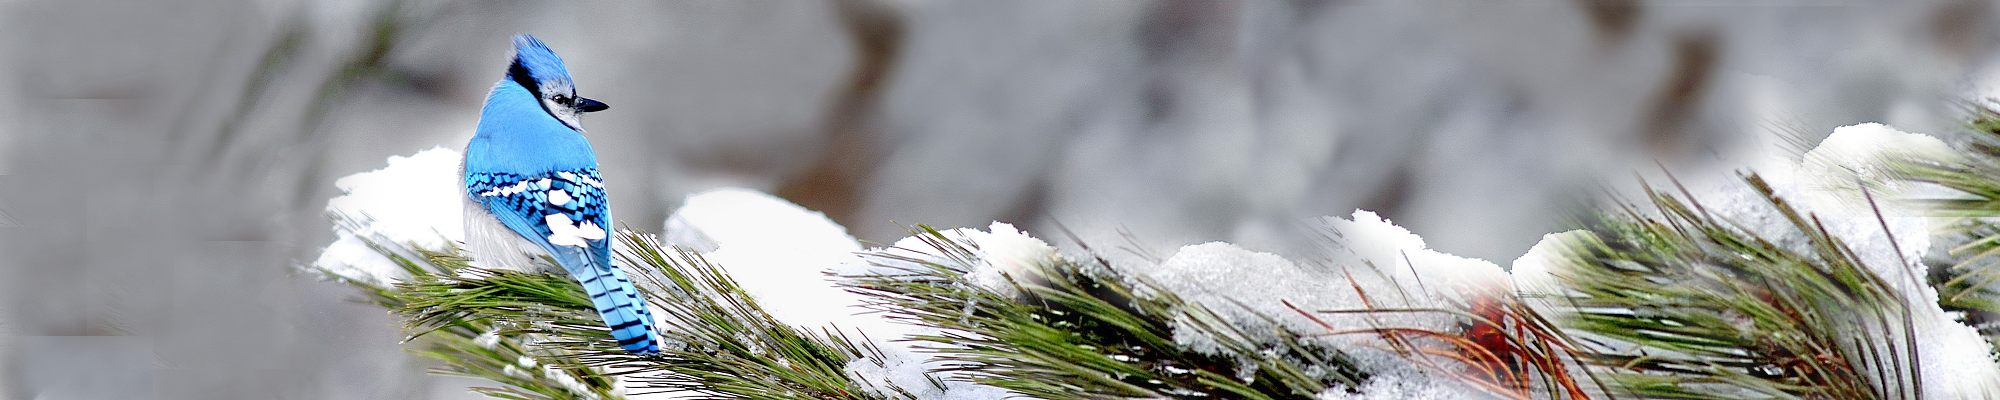 Blue jay (Cyanocitta cristata), on snowy evergreen branch in winter,